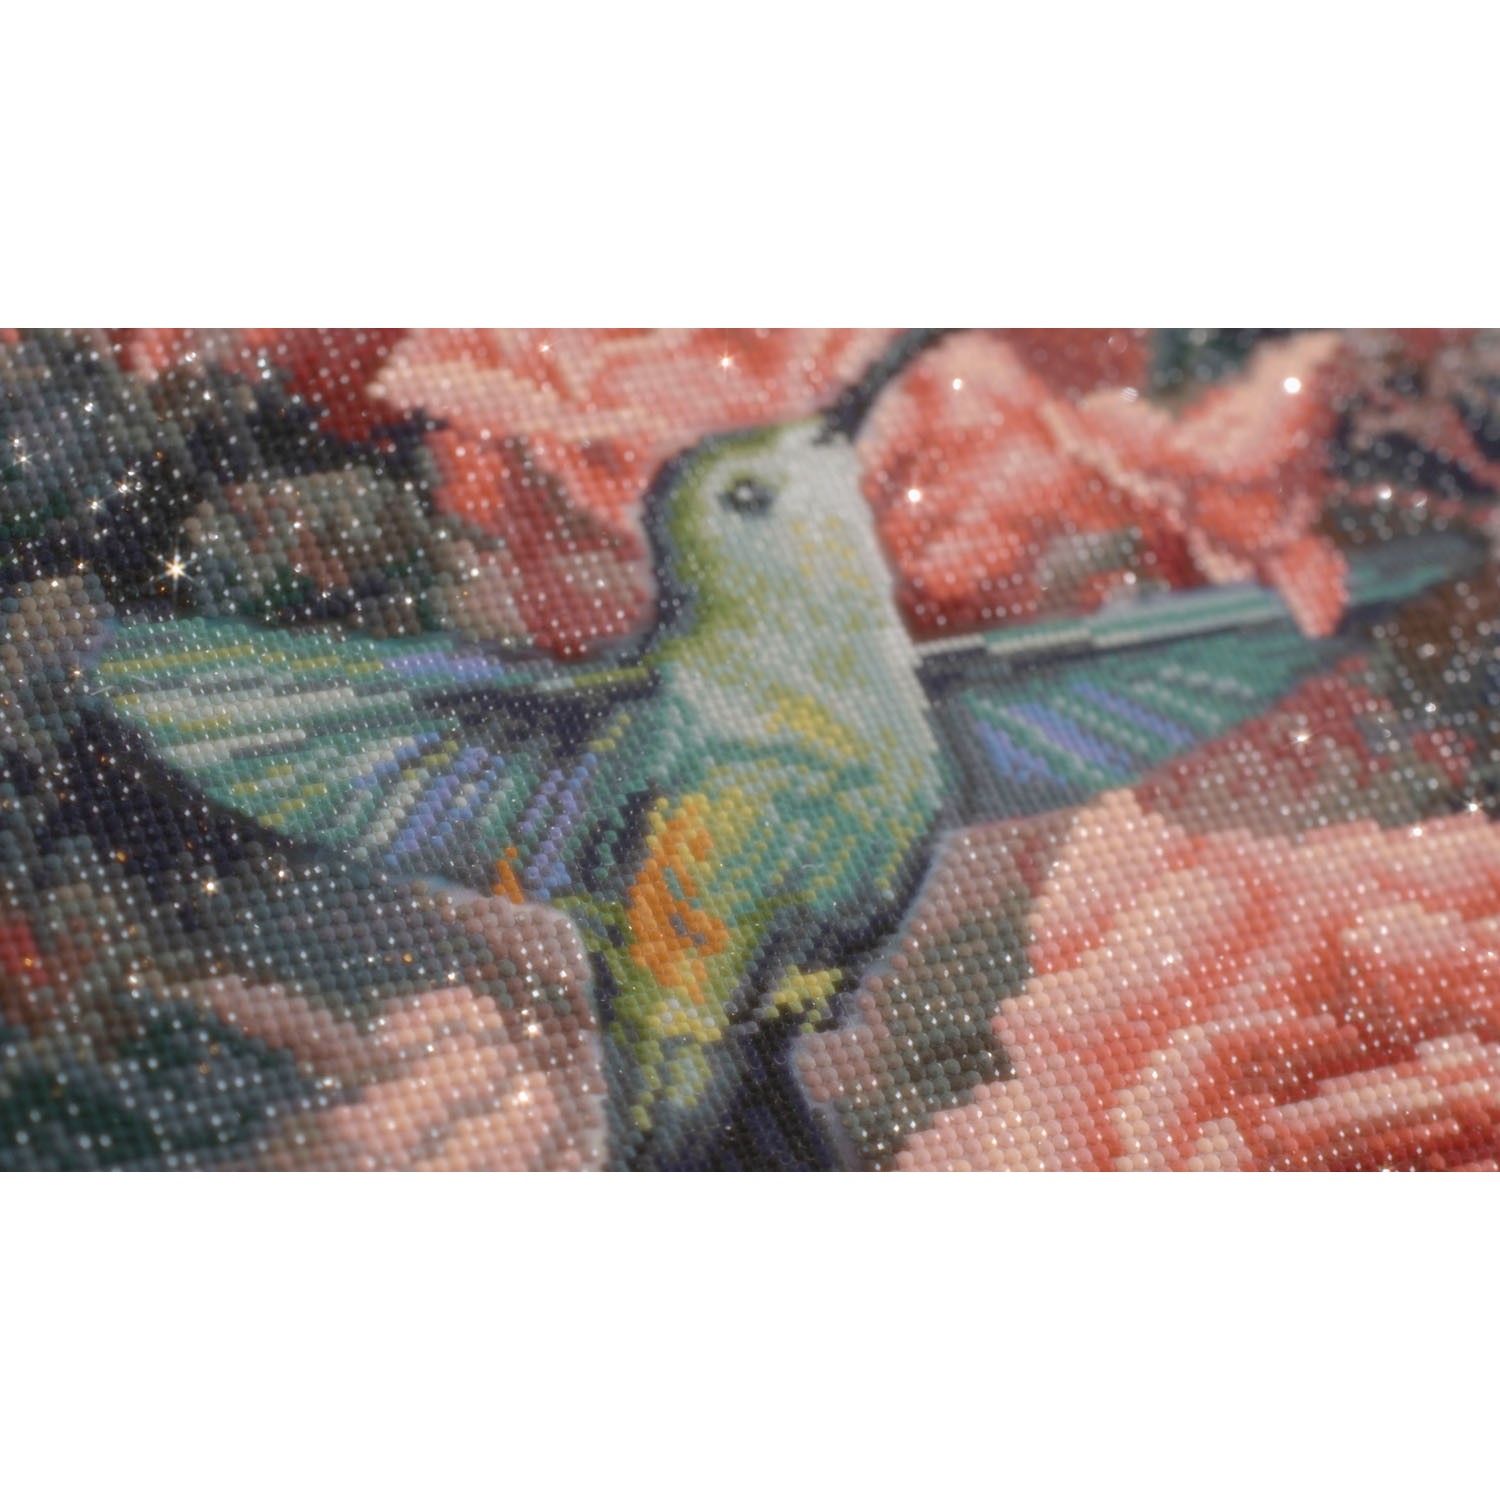 Roses & Hummingbird – Masterclass Diamond Painting Artwork Kit